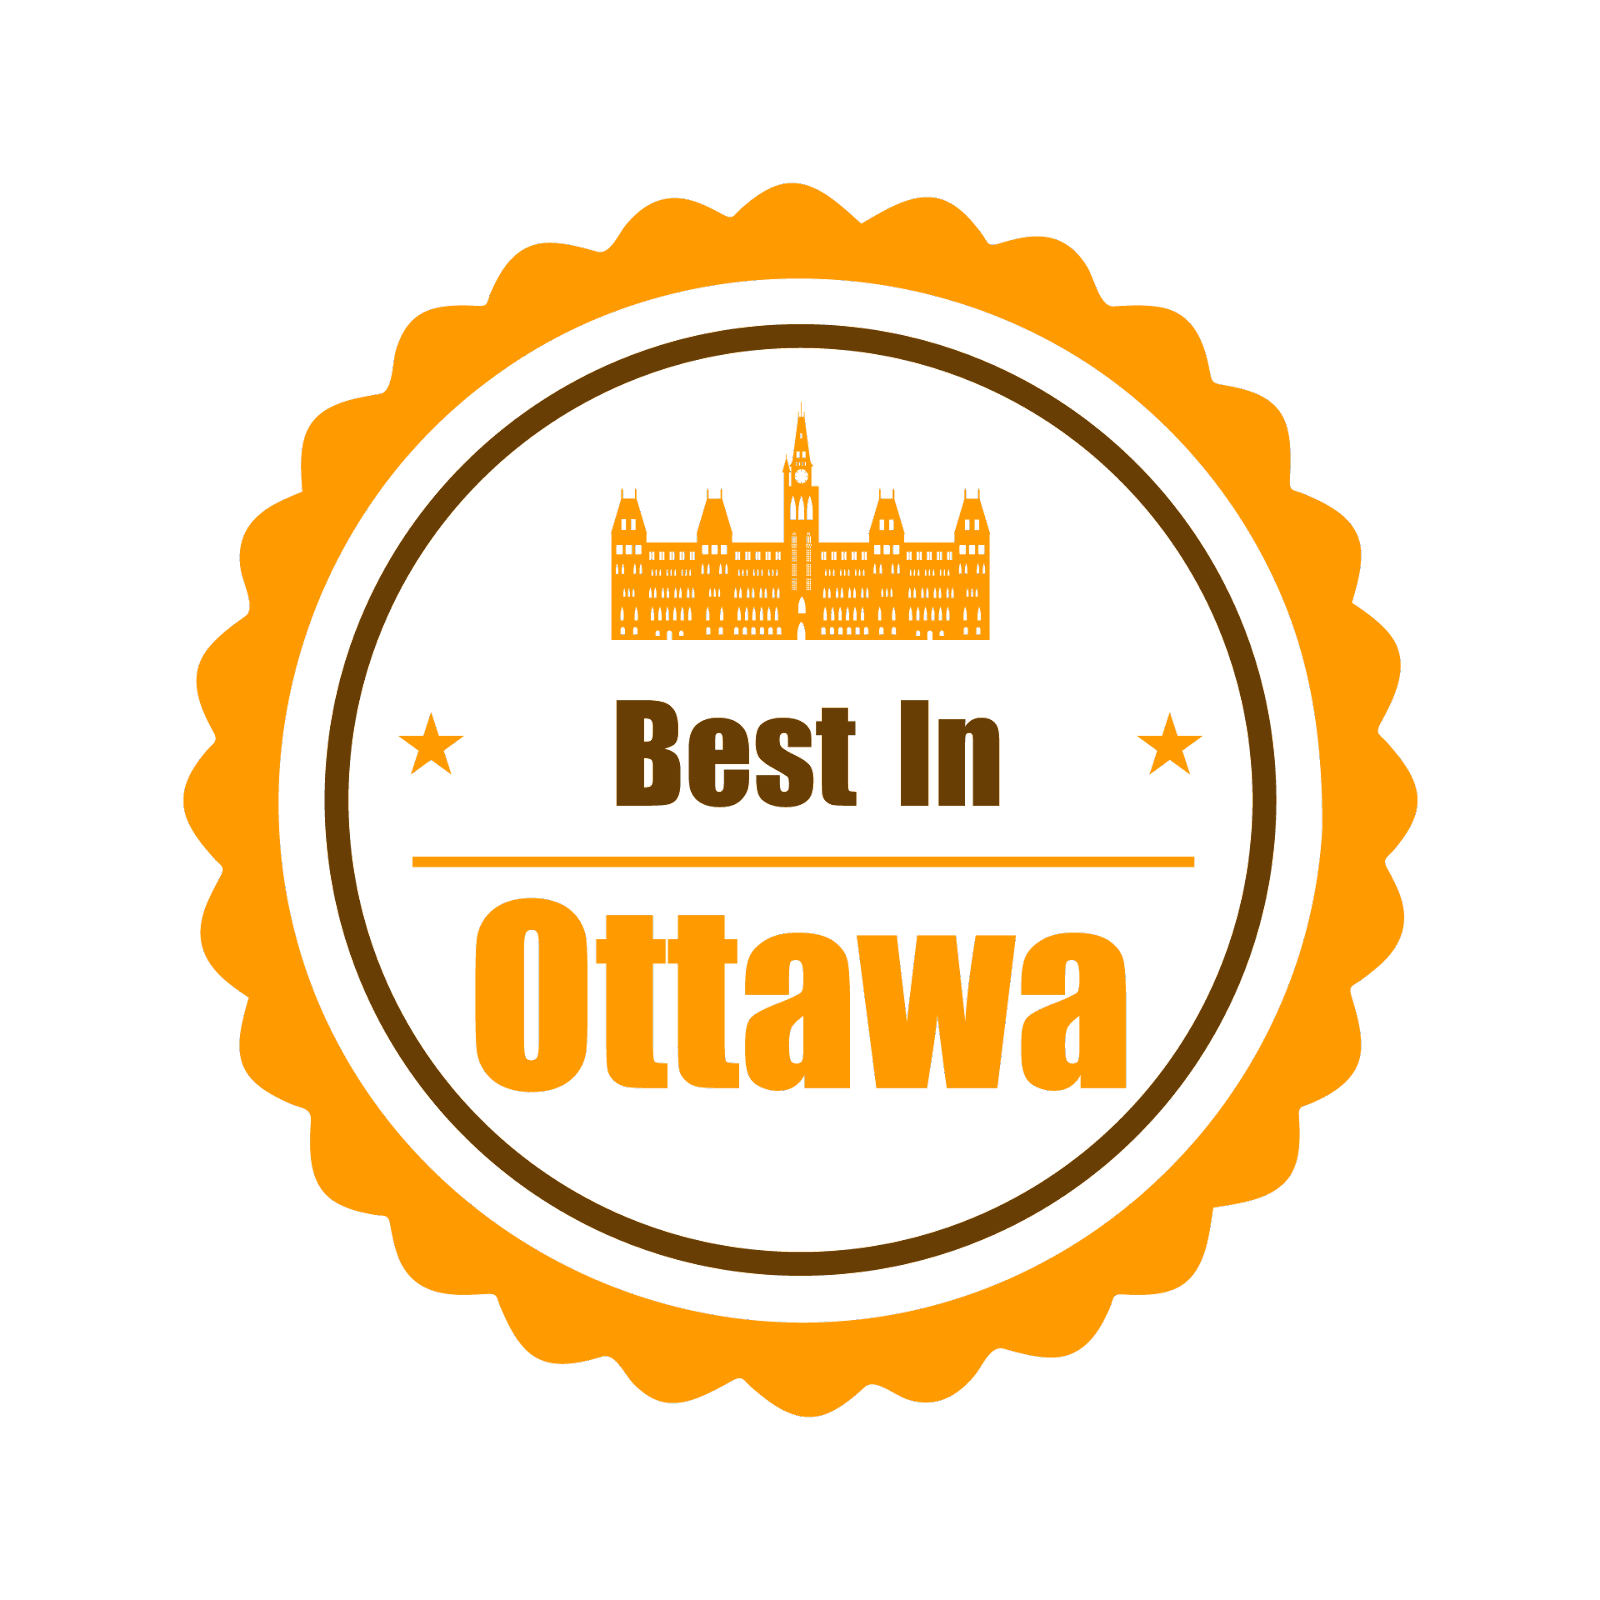 Best In Ottawa badge